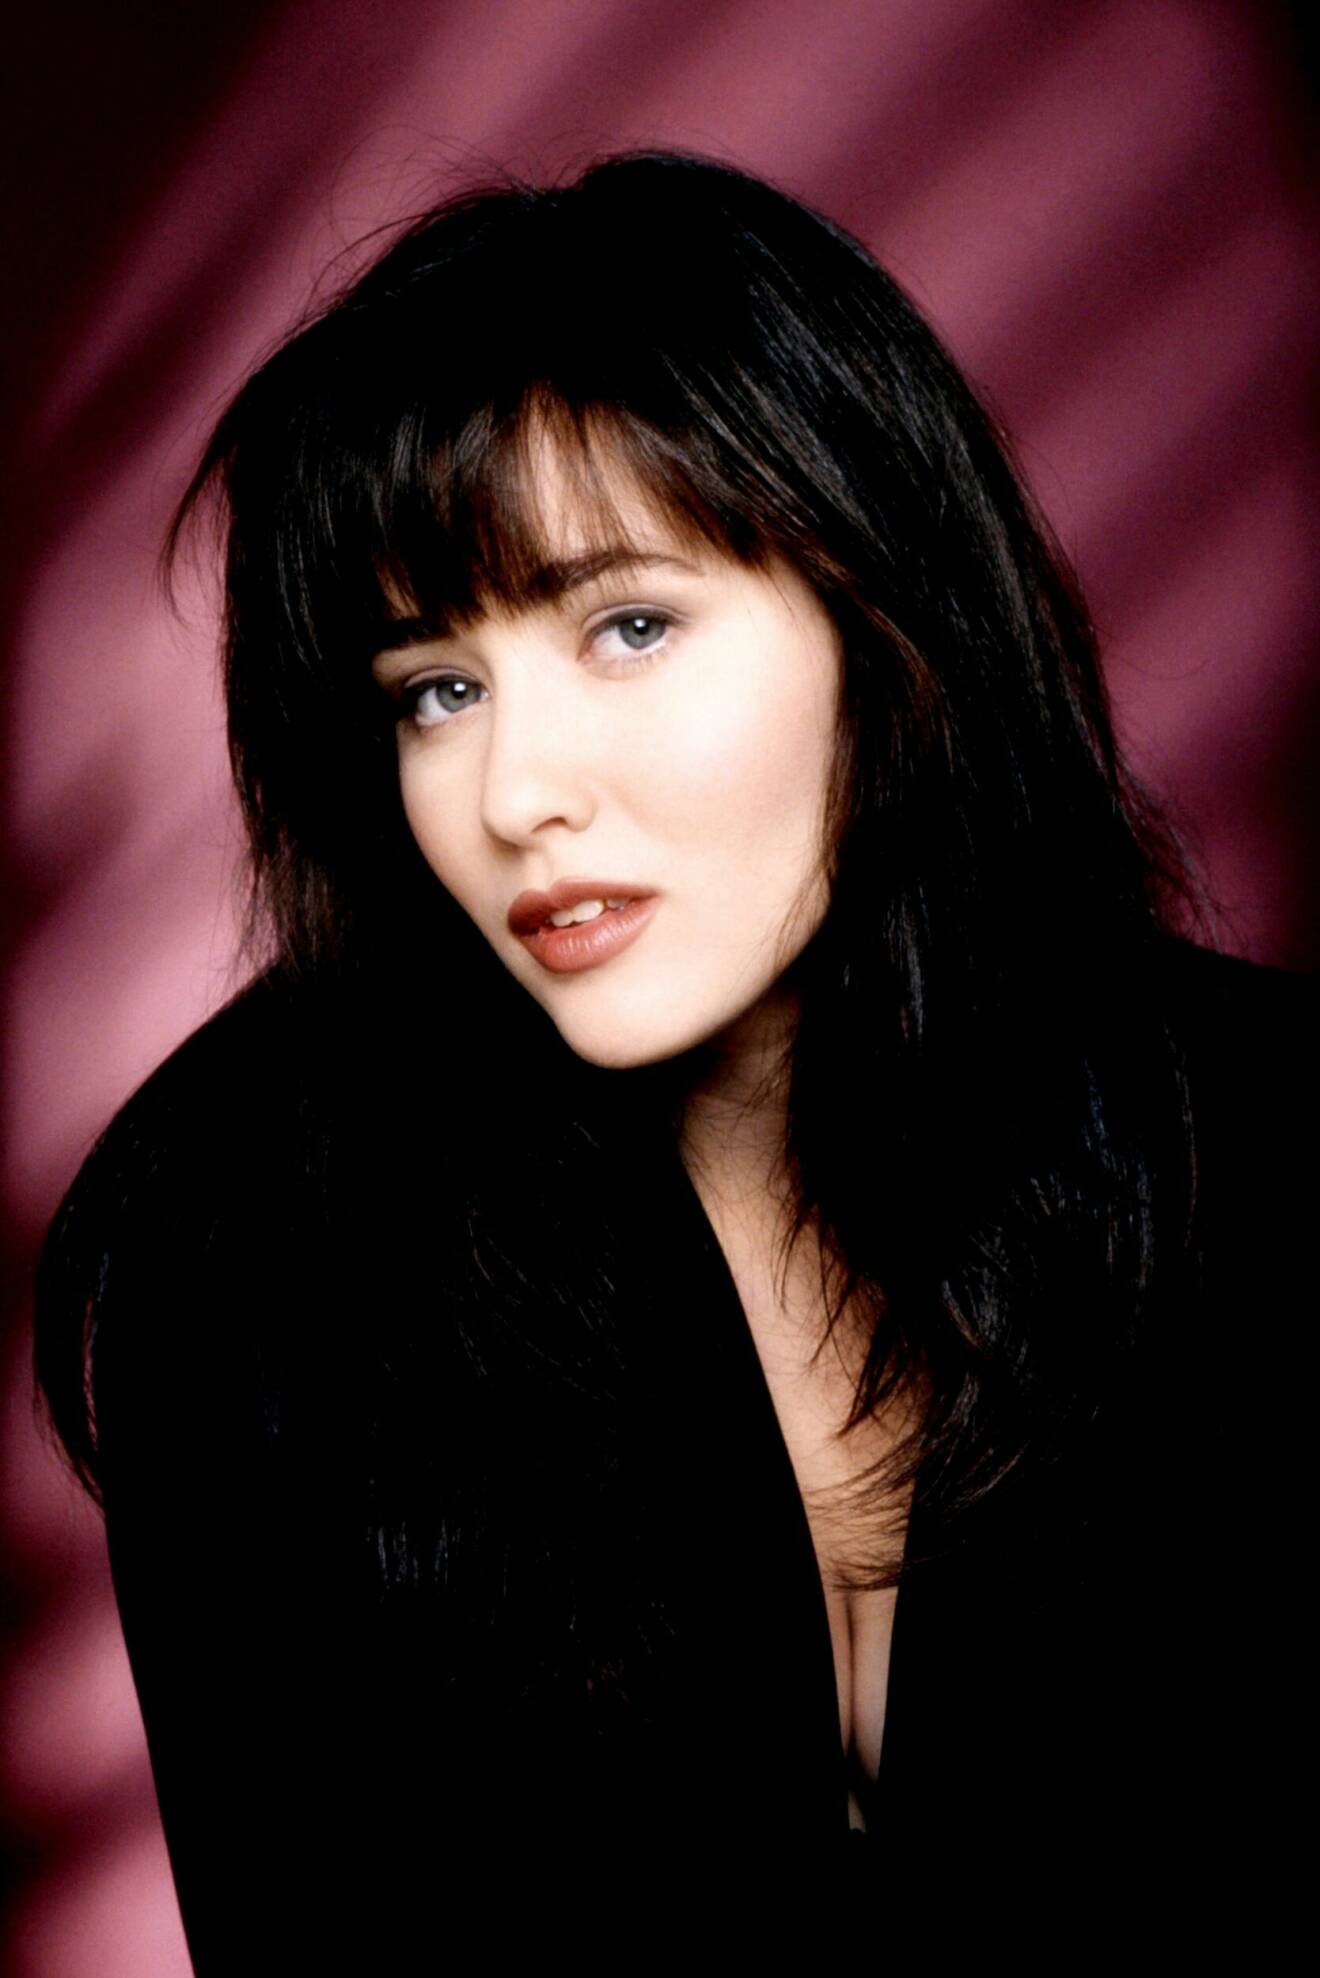 Shannen Doherty spelade Brena Walsh i Beverly hills 90210.